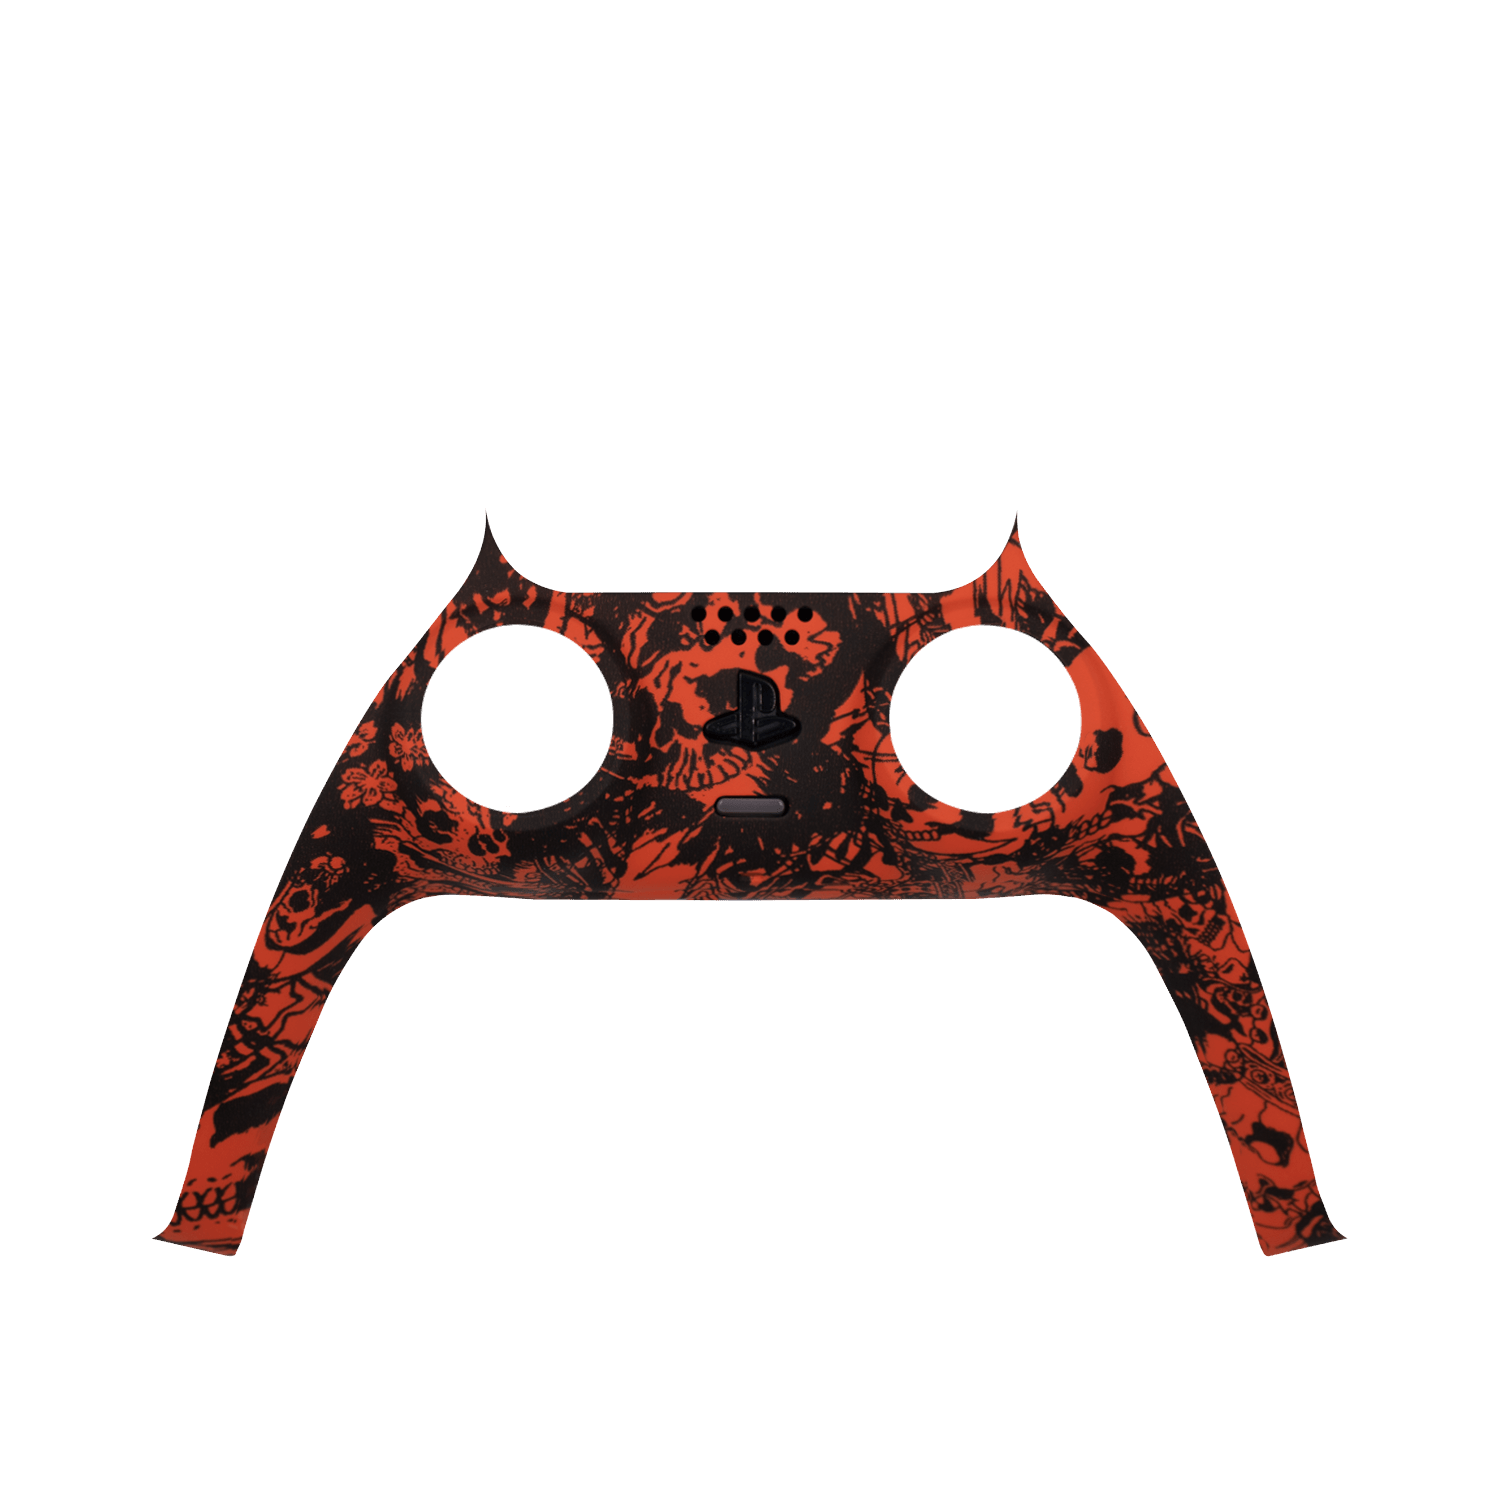 PS5 Soft Touch Hydrodip Trim - Battle Beaver Customs - SFT Red Black Skulls